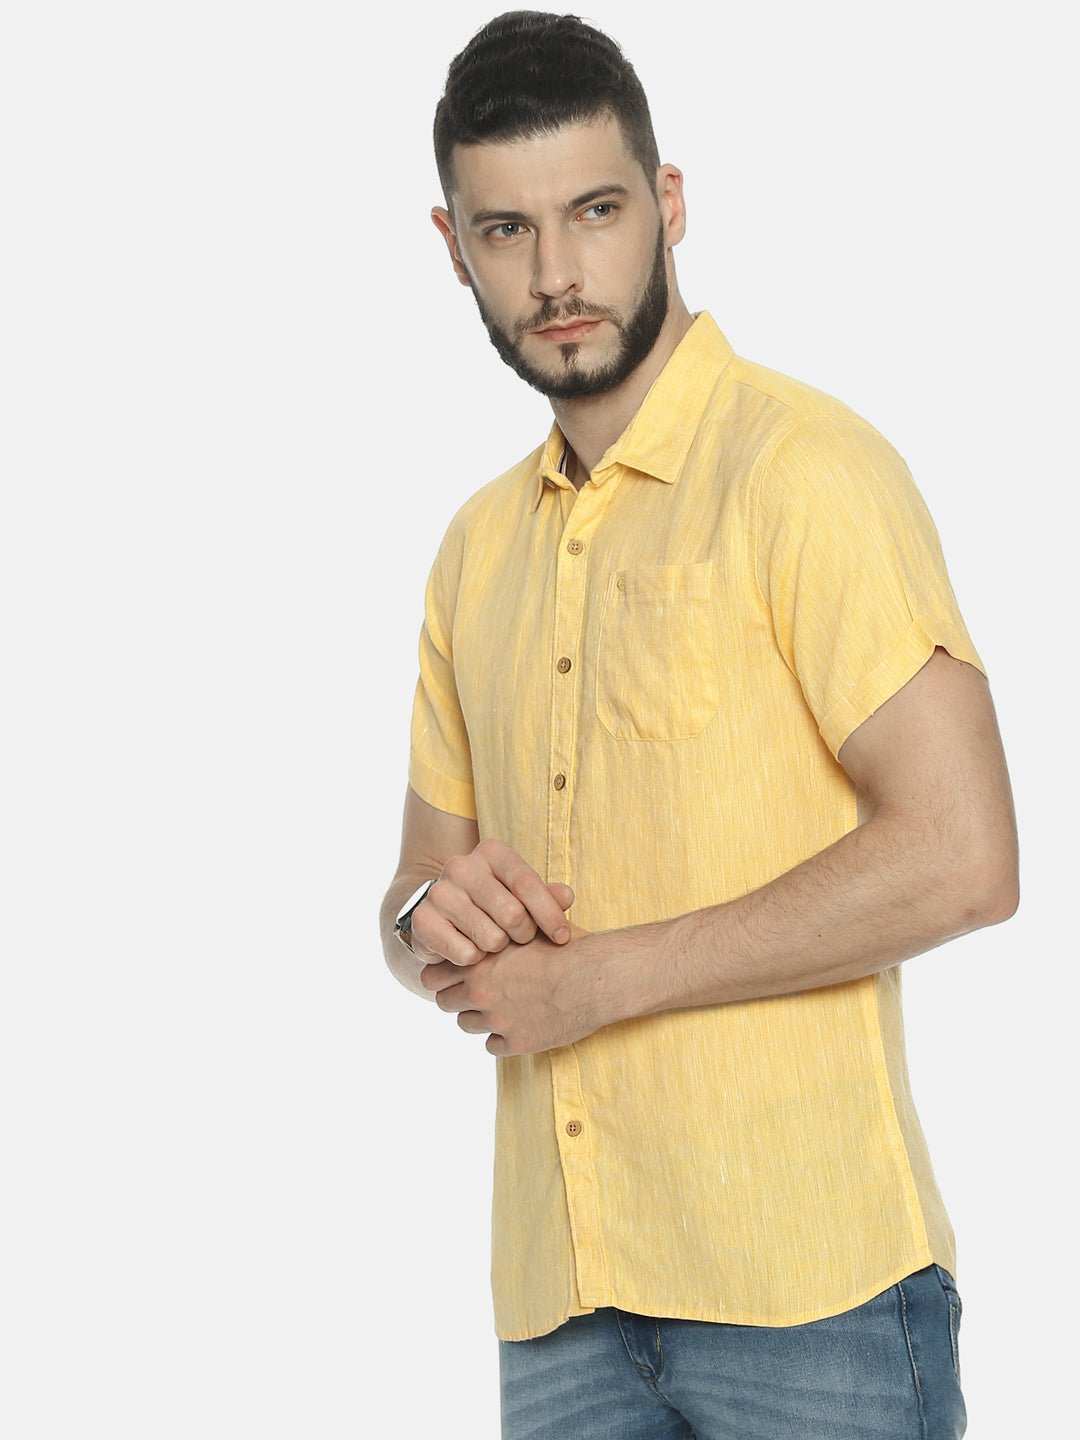 Ecentric Lemon Yellow Colour Slim Fit Hemp Casual Shirt - CBD Store India